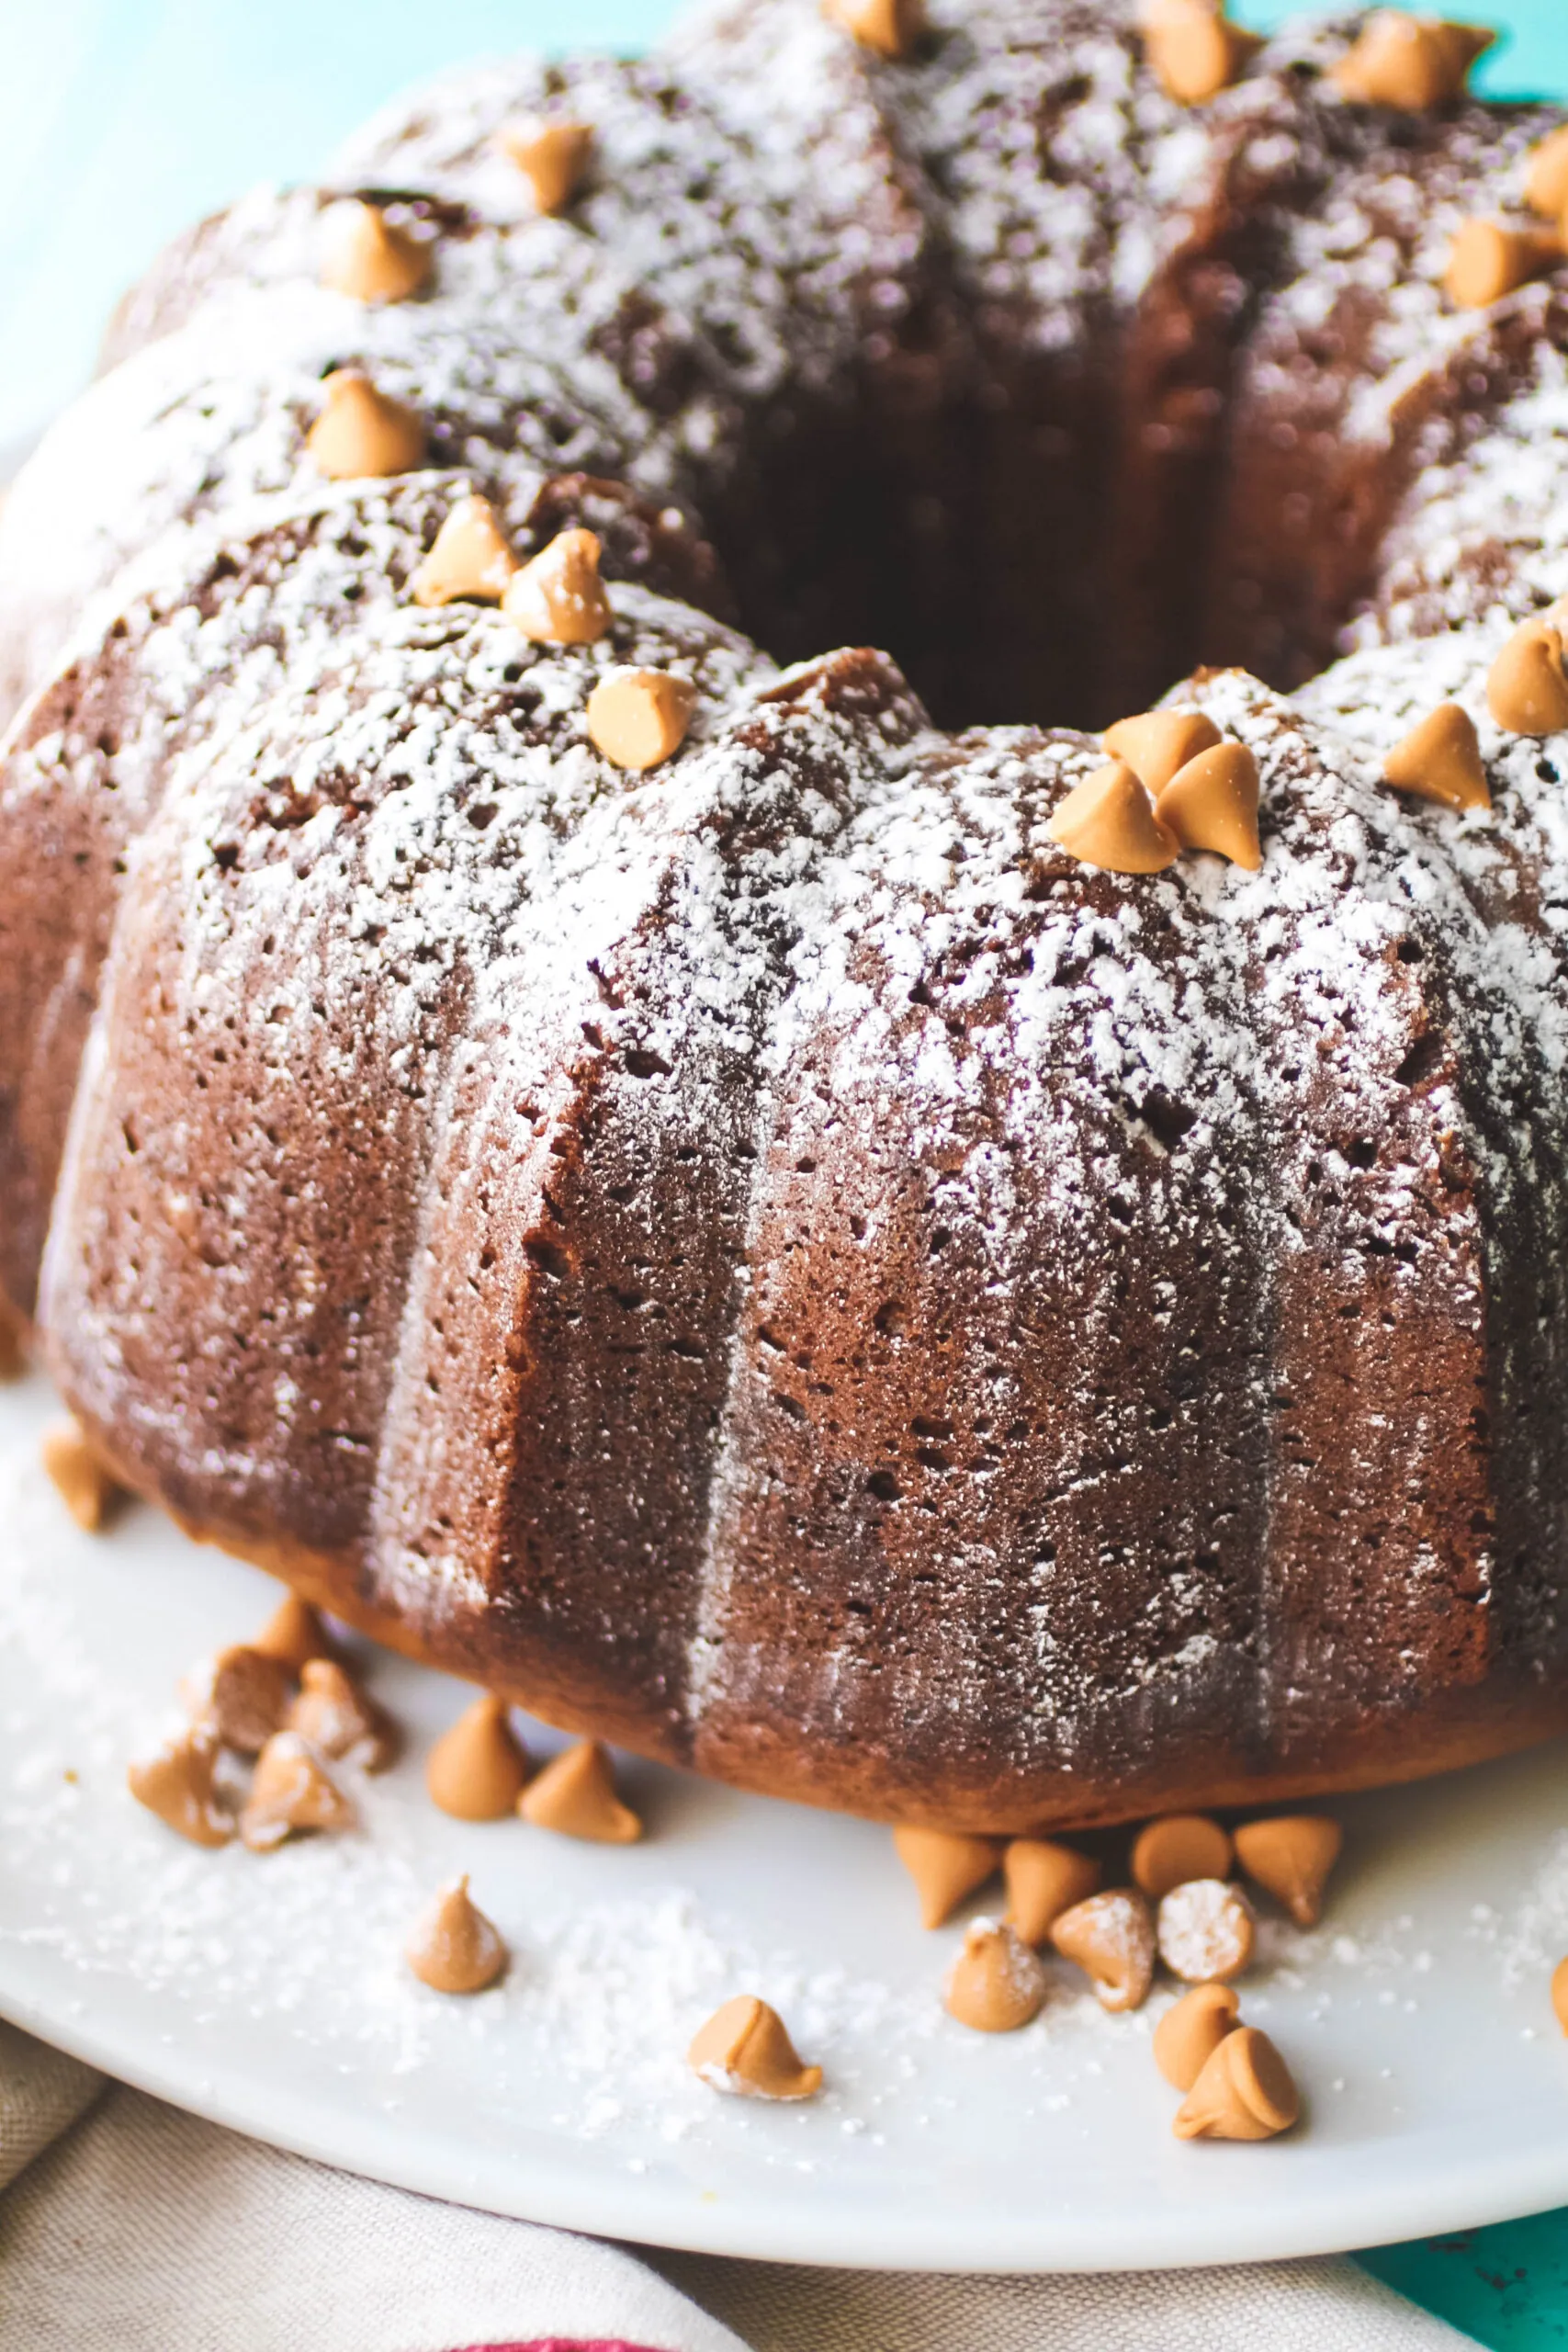 A Banana-Butterscotch Bundt Cake on a platter means a tasty dessert is nearby! 